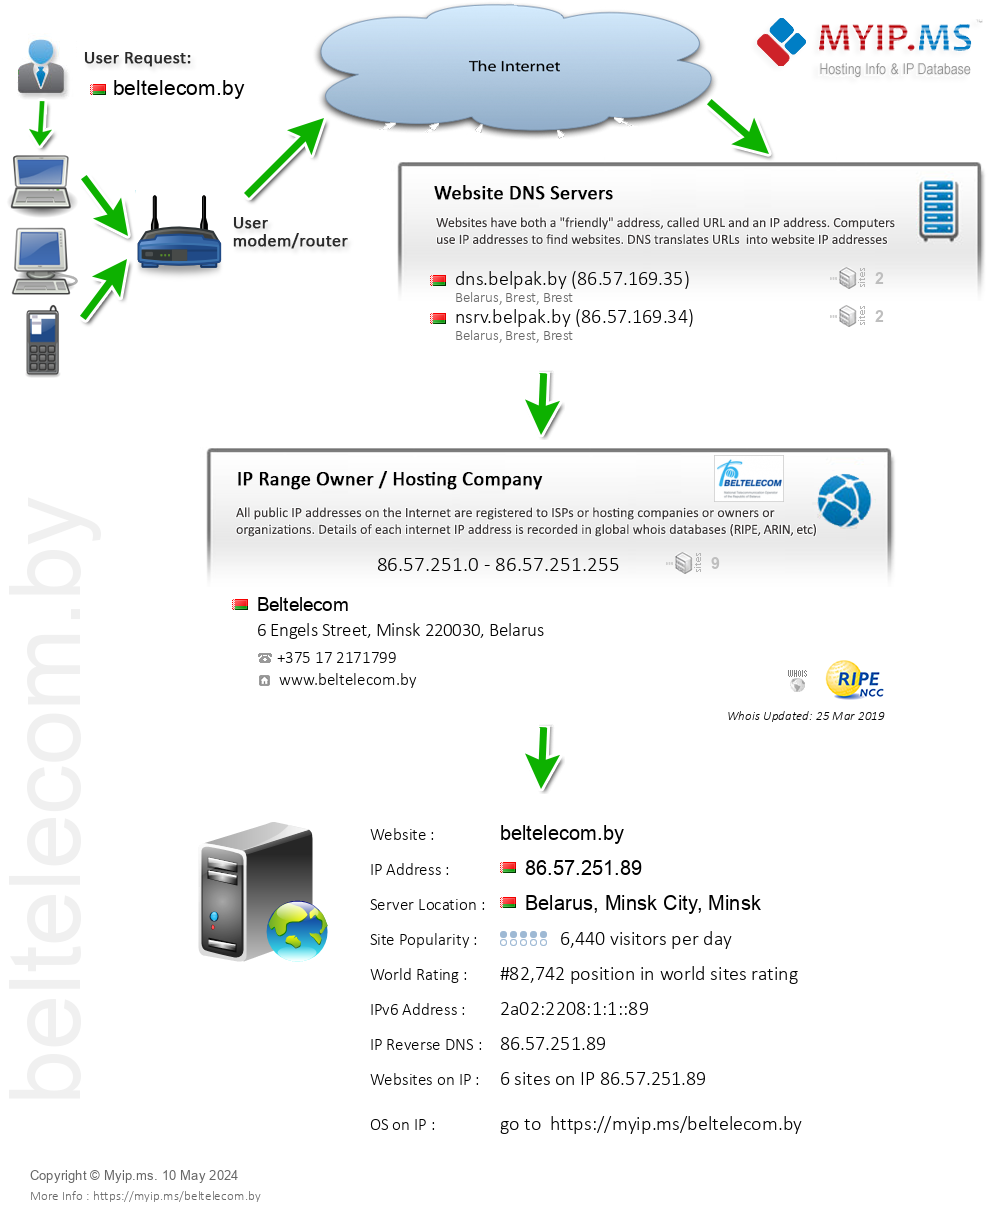 Beltelecom.by - Website Hosting Visual IP Diagram